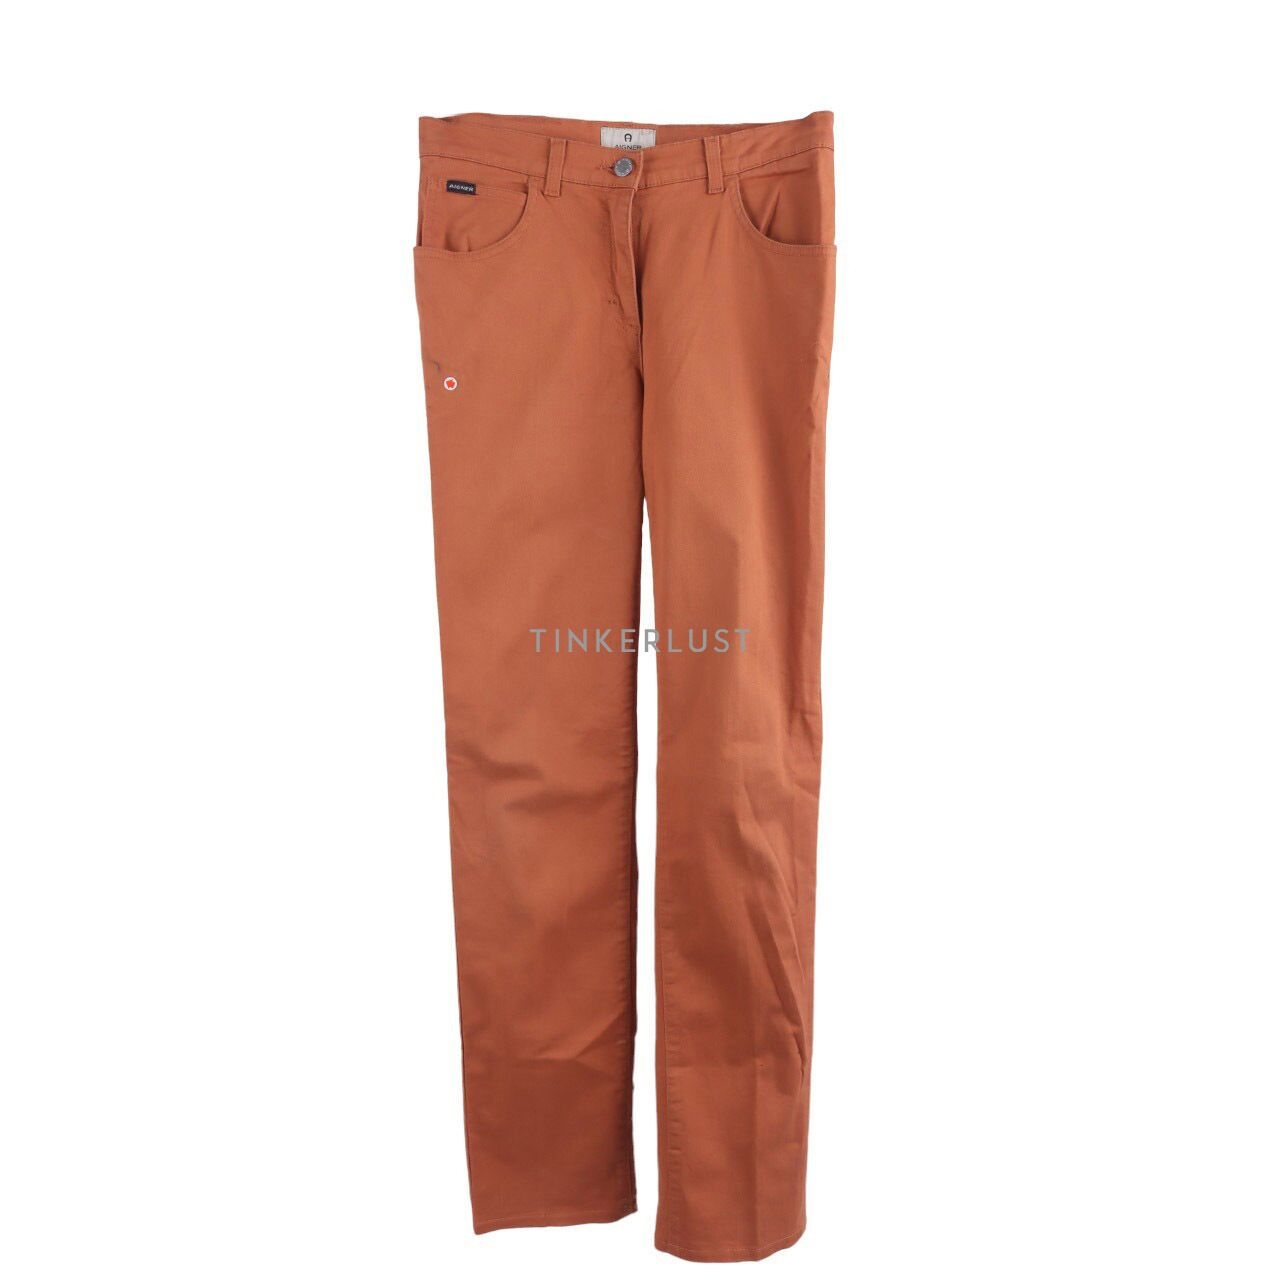 Aigner Orange Long Pants